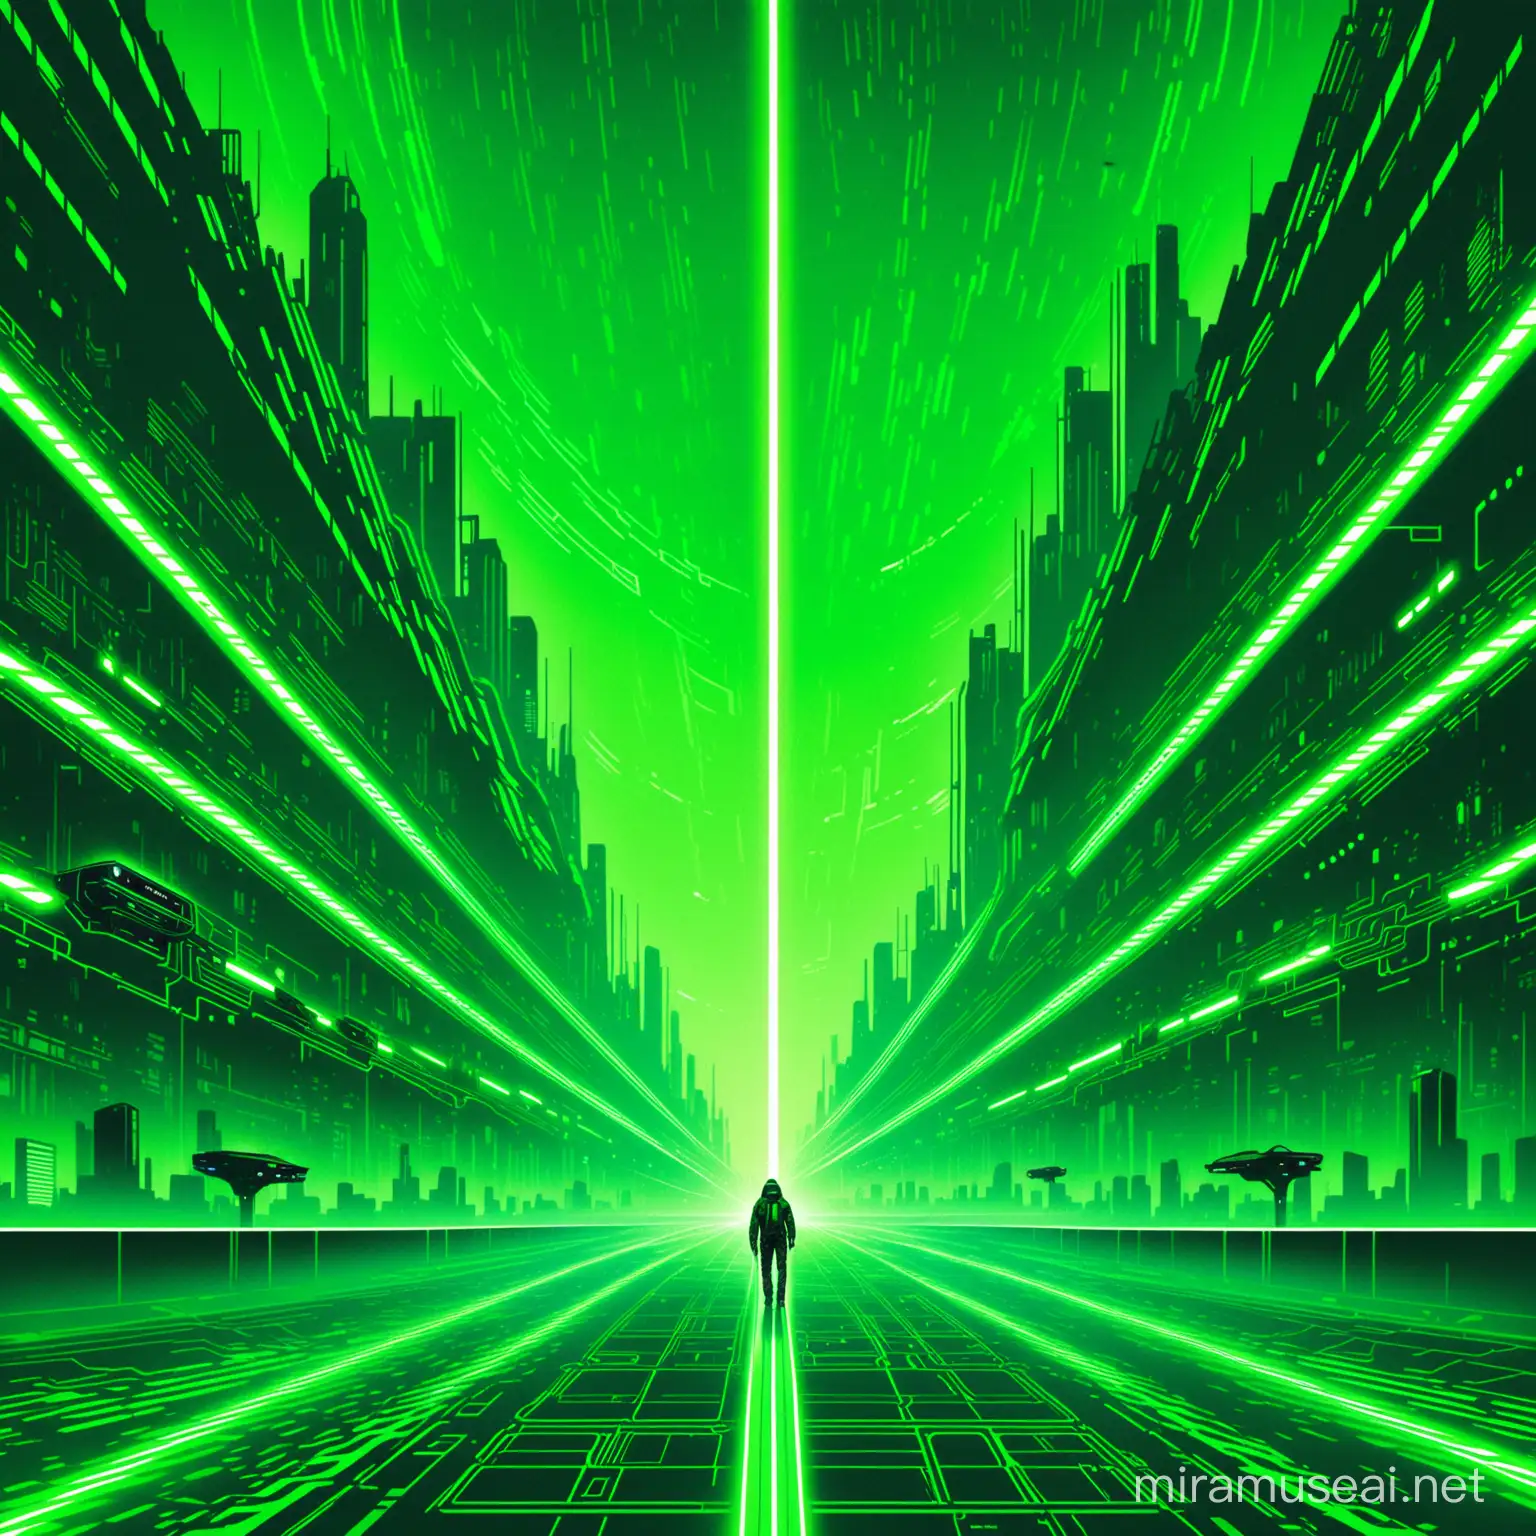 Futuristic Cyberpunk Album Cover with Green Tones